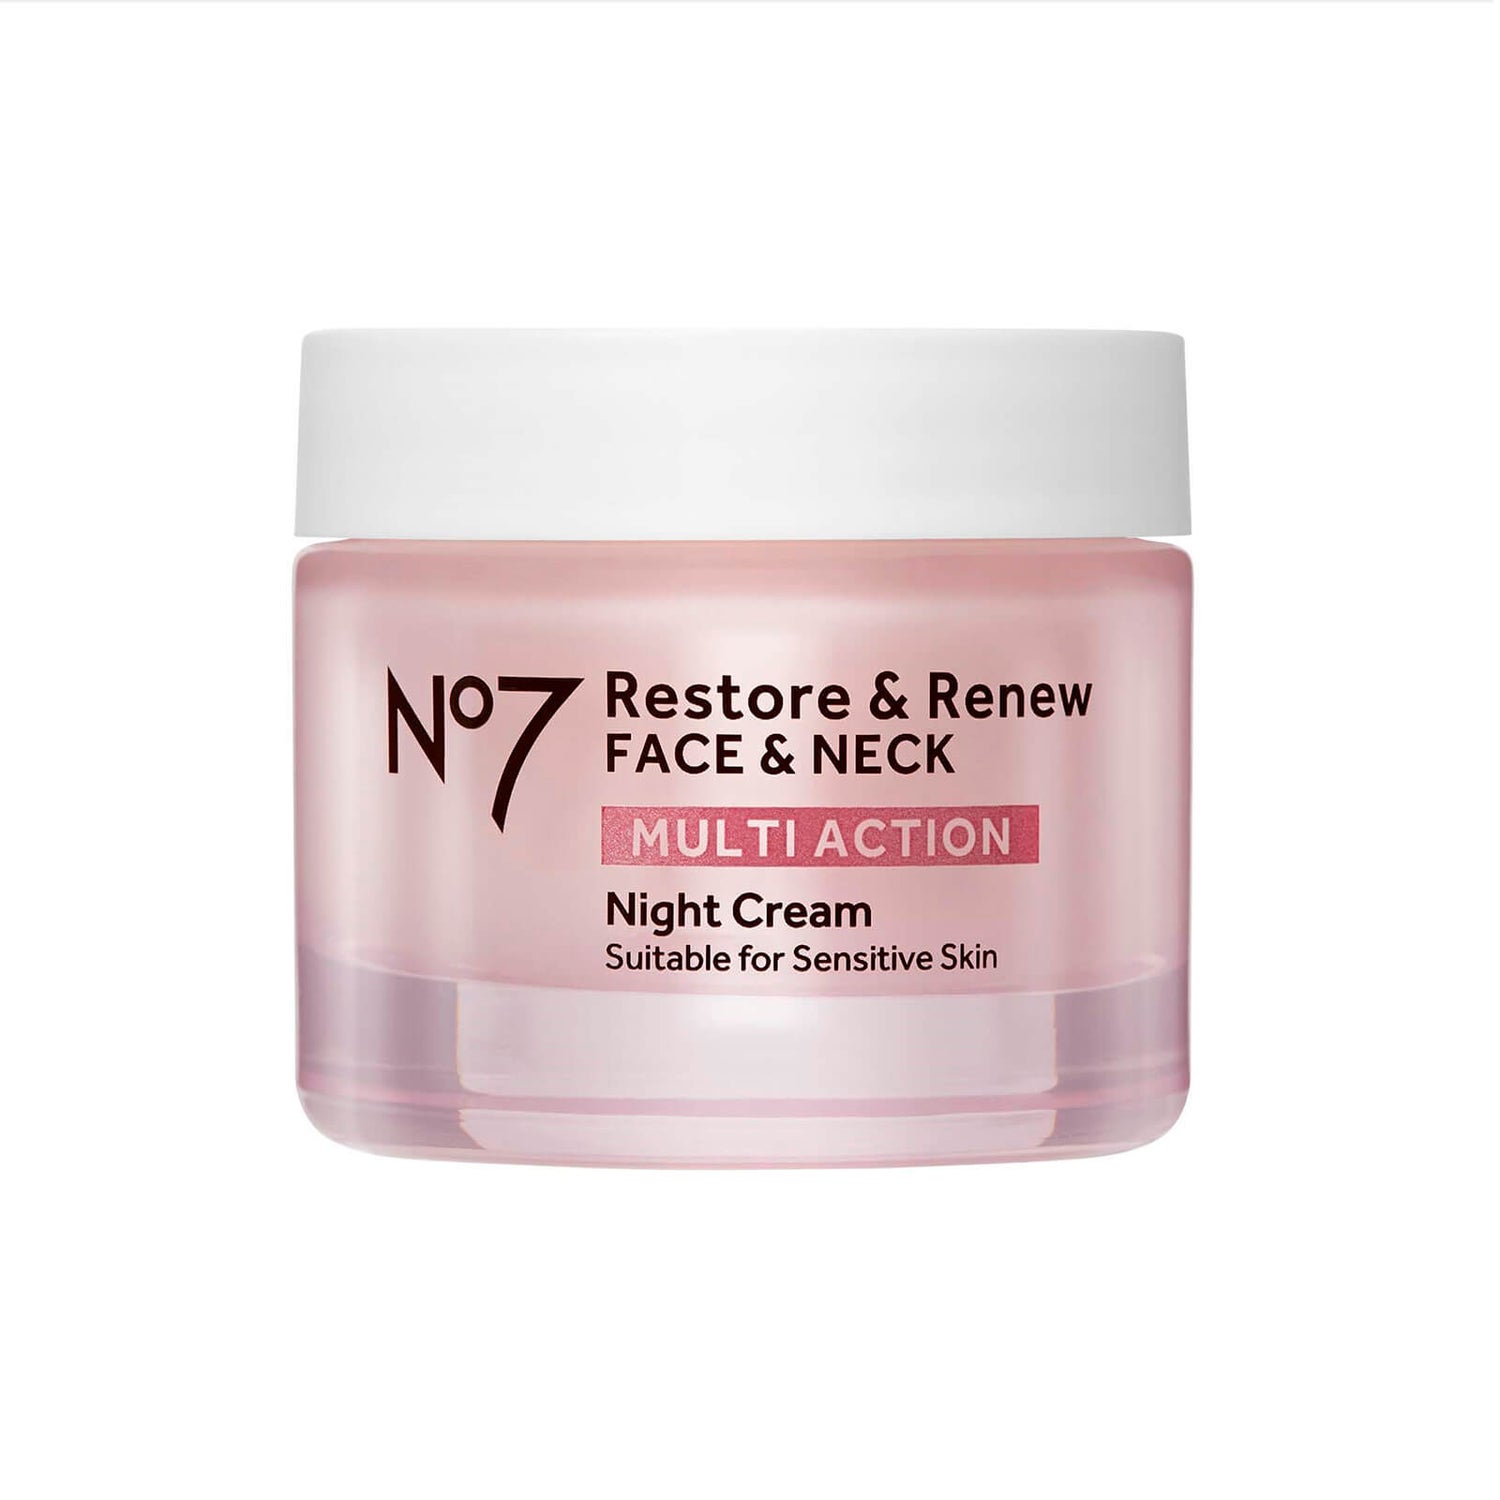 Restore & Renew Multi Action Face & Neck Night Cream